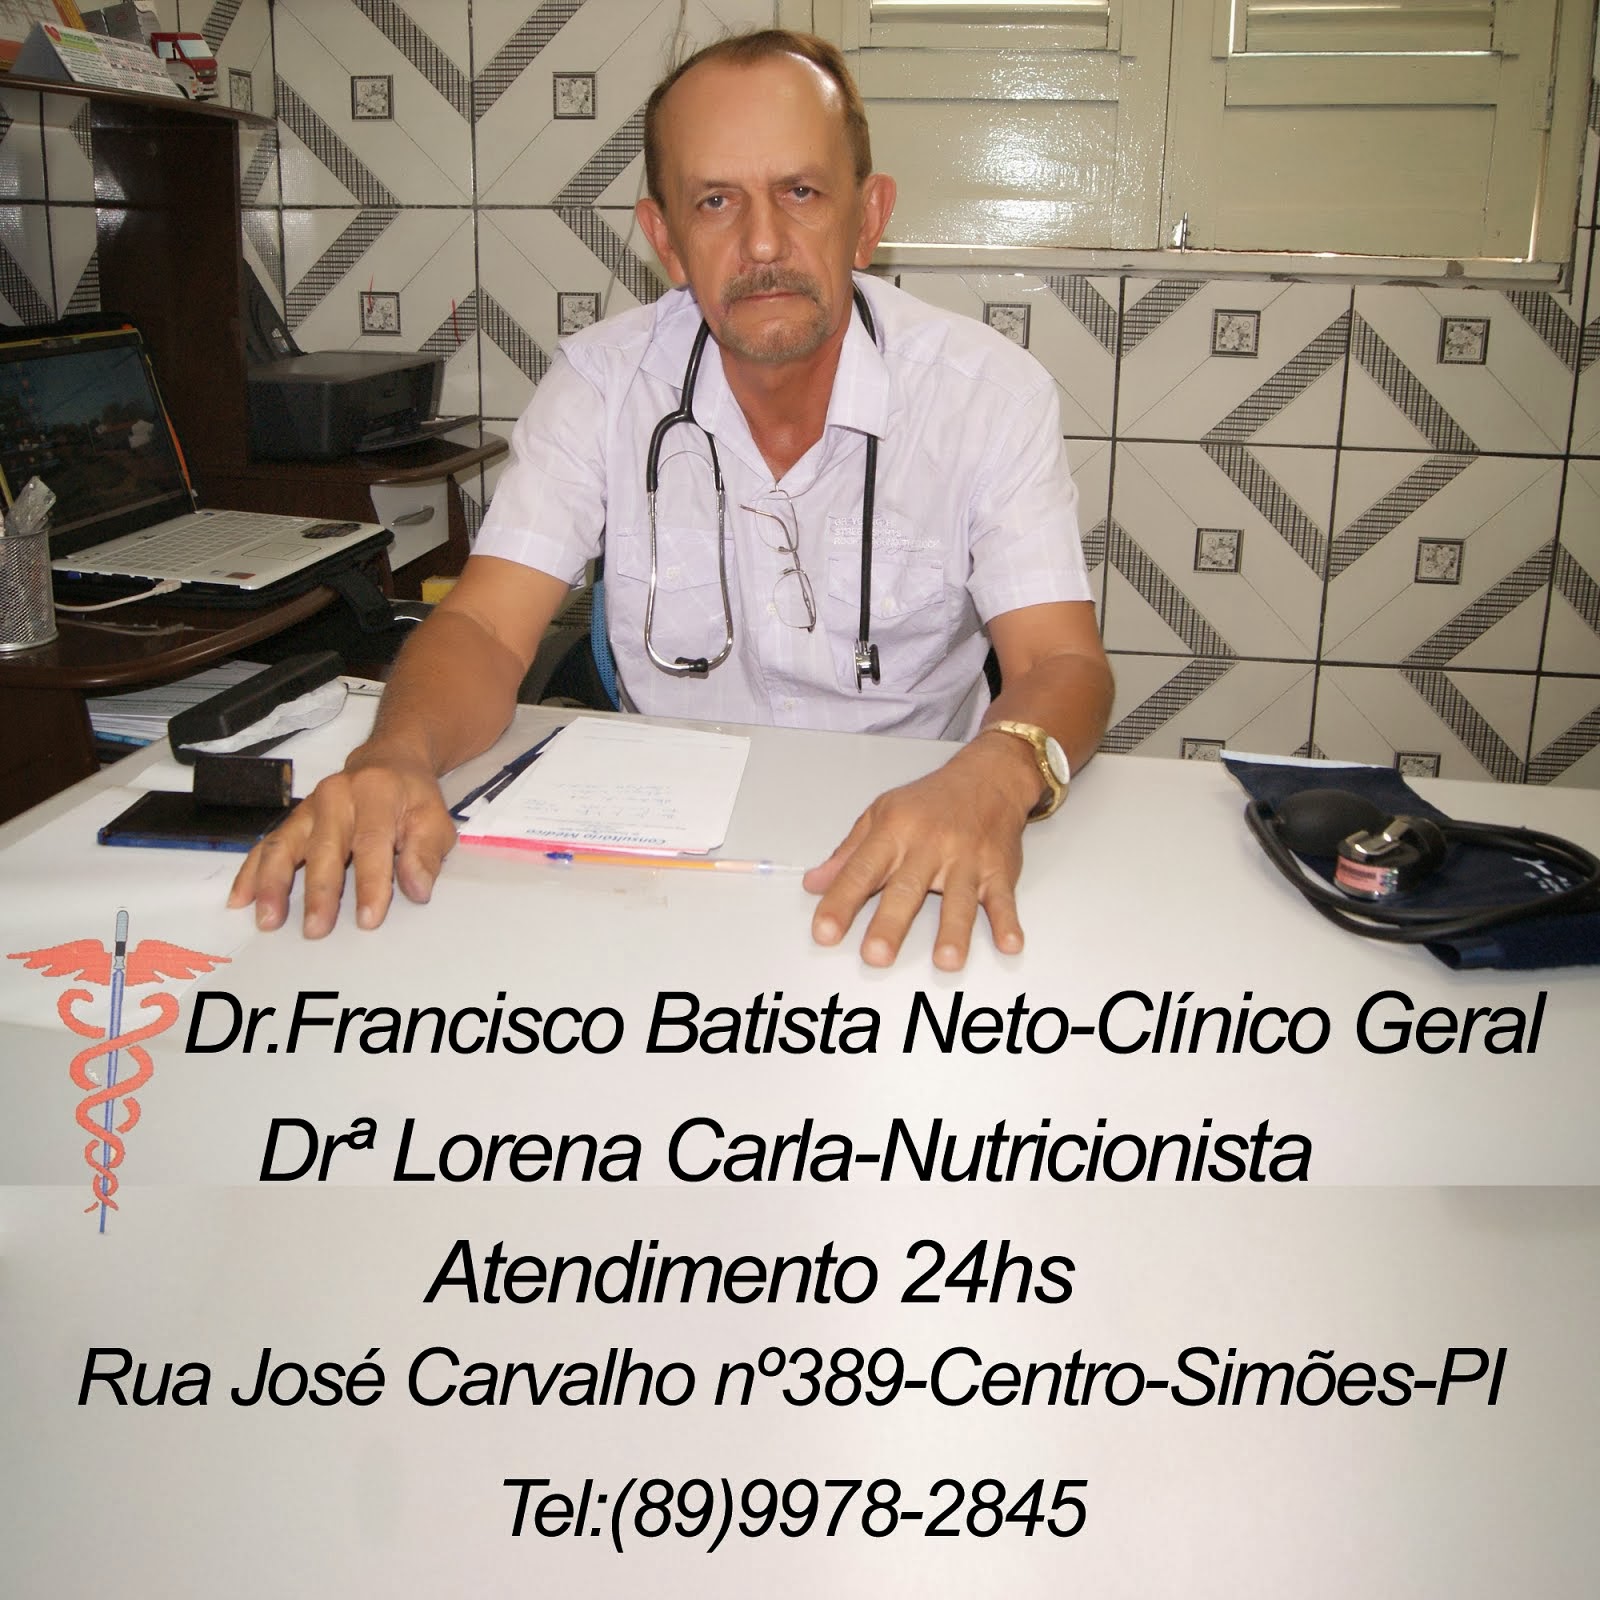 DR. FRANCISCO BATISTA NETO